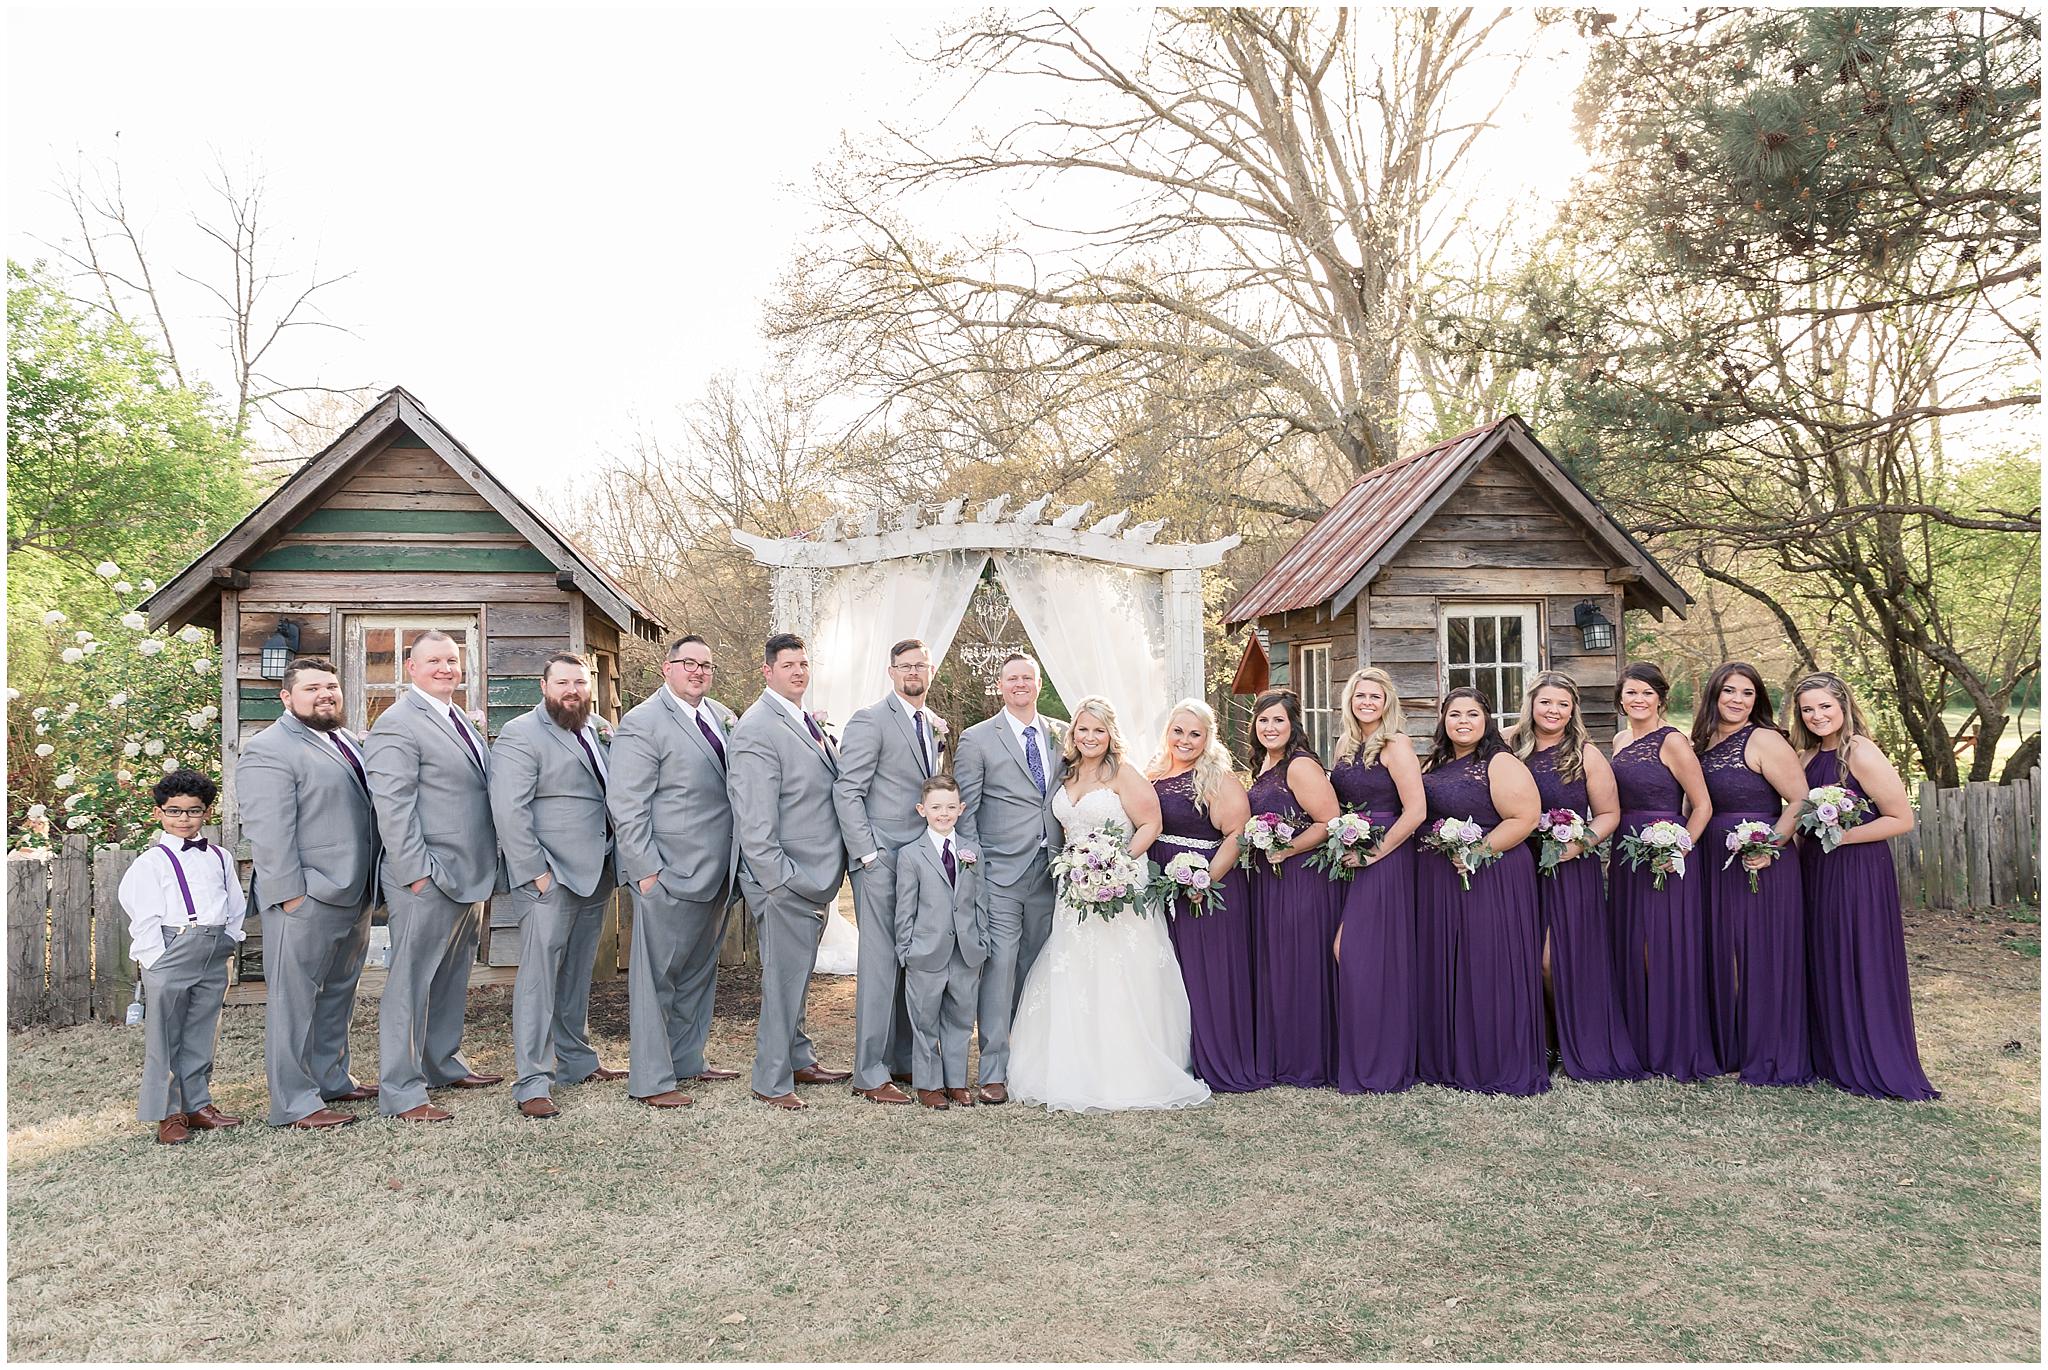 9 oaks farm wedding party bridesmaids groomsmen purple gray suits_0001.jpg